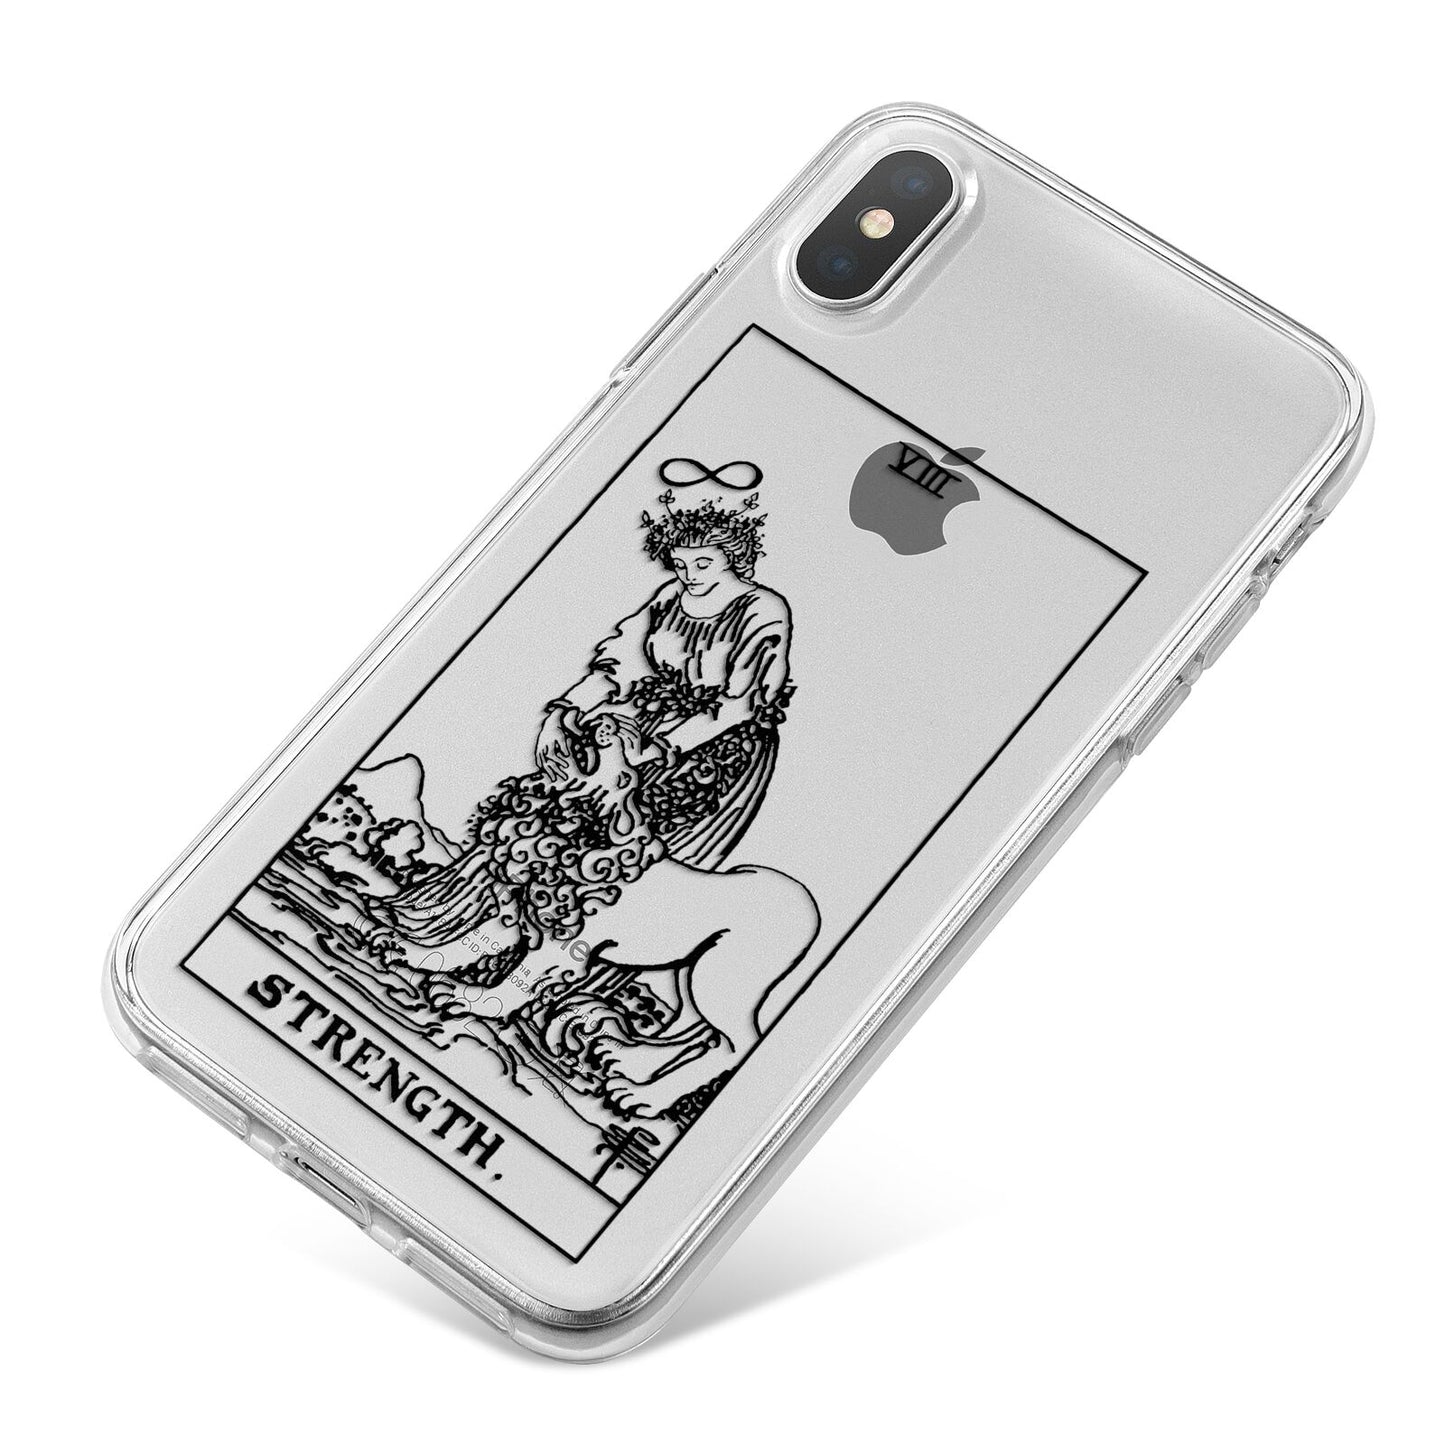 Strength Monochrome Tarot Card iPhone X Bumper Case on Silver iPhone